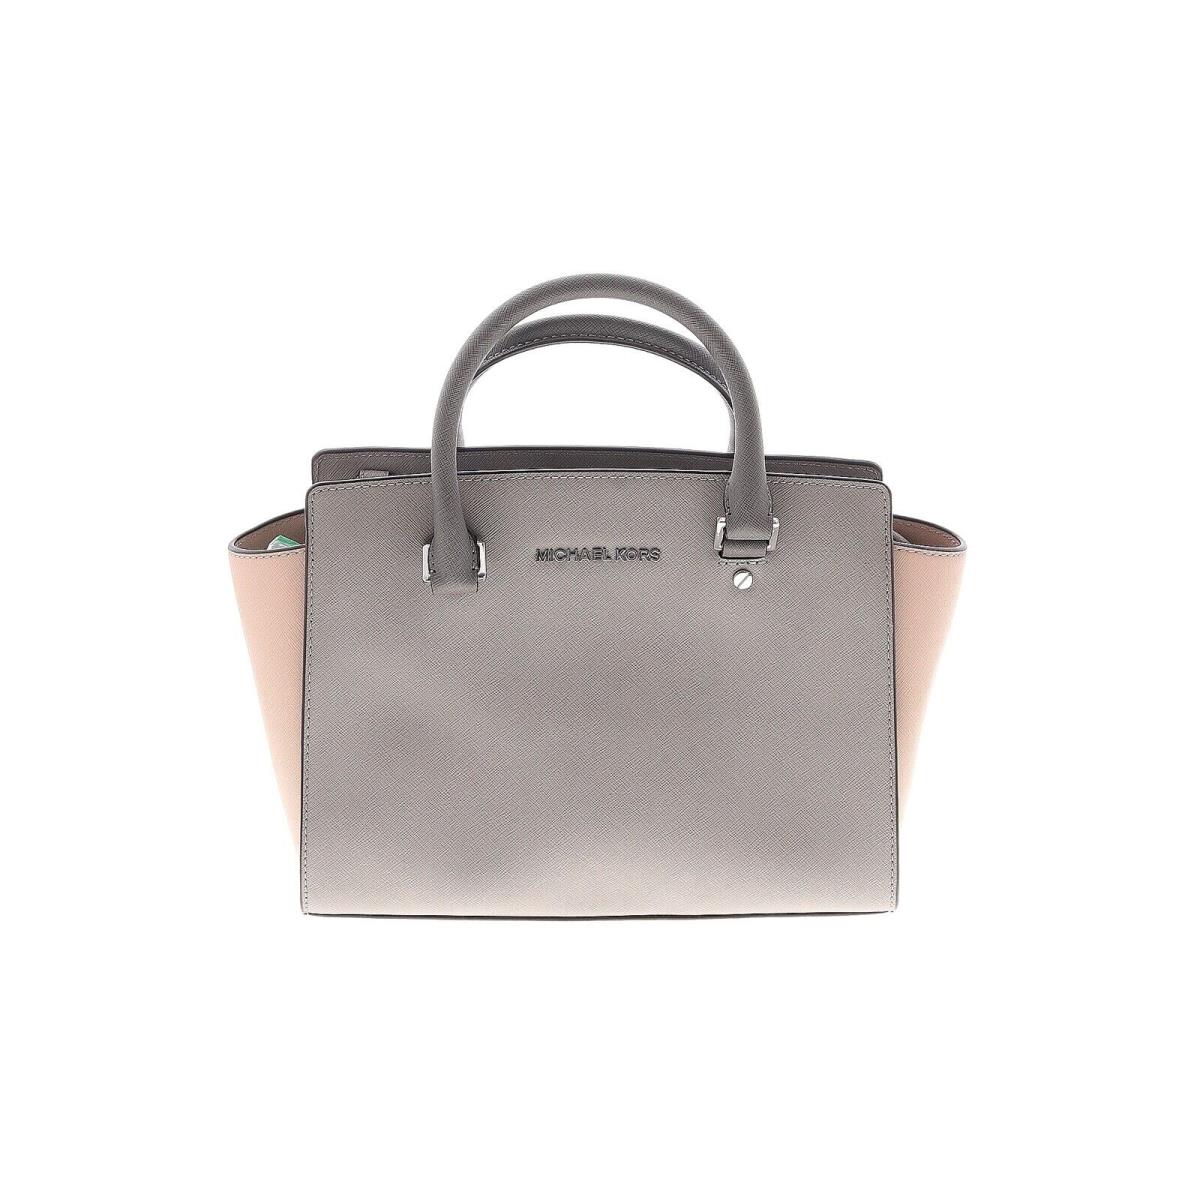 Michael Kors Selma handbag satchel crossbody Black Silver hardware